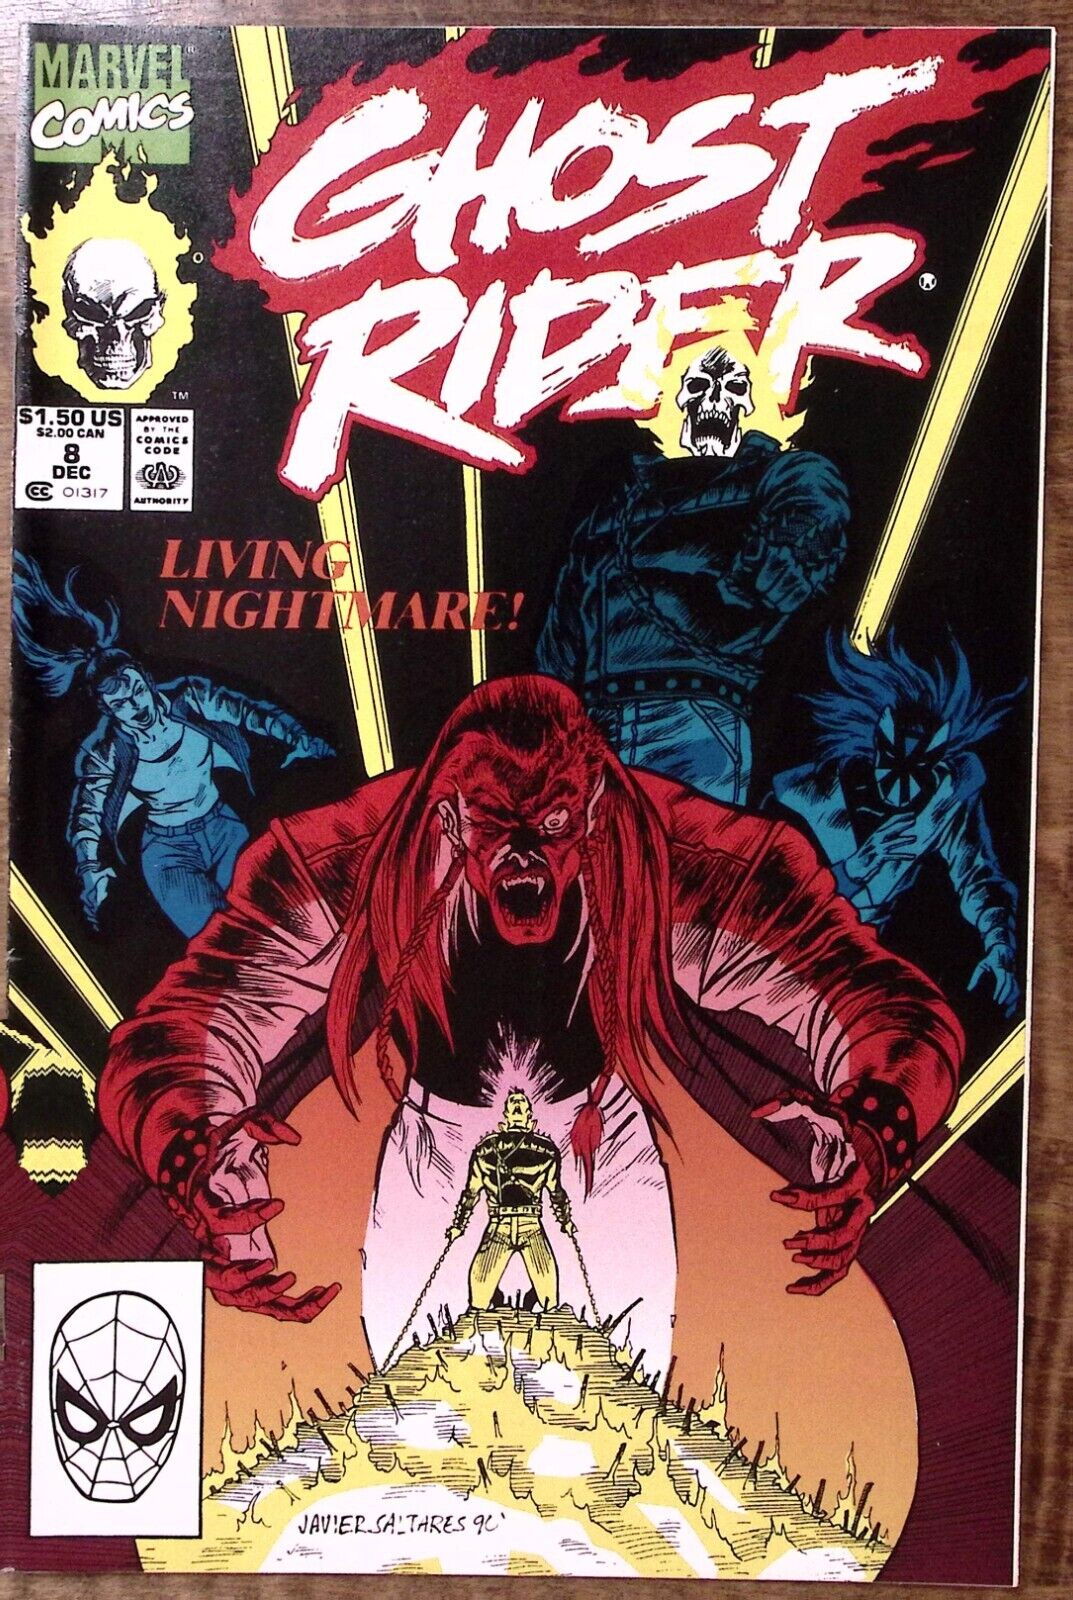 1990 GHOST RIDER DEC #8 MARVEL COMICS LIVING NIGHTMARE EXC NEAR MINT Z3679